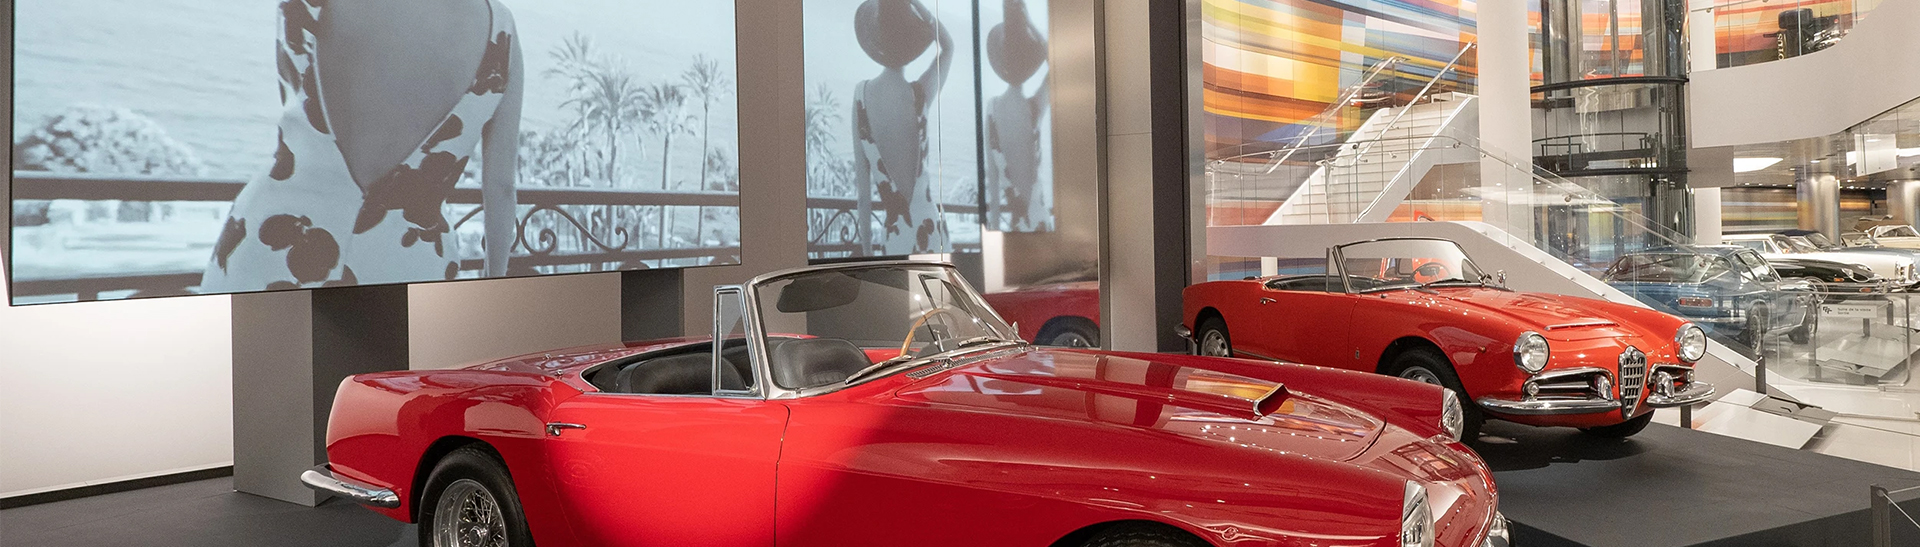 musee collection automobile prince-monaco